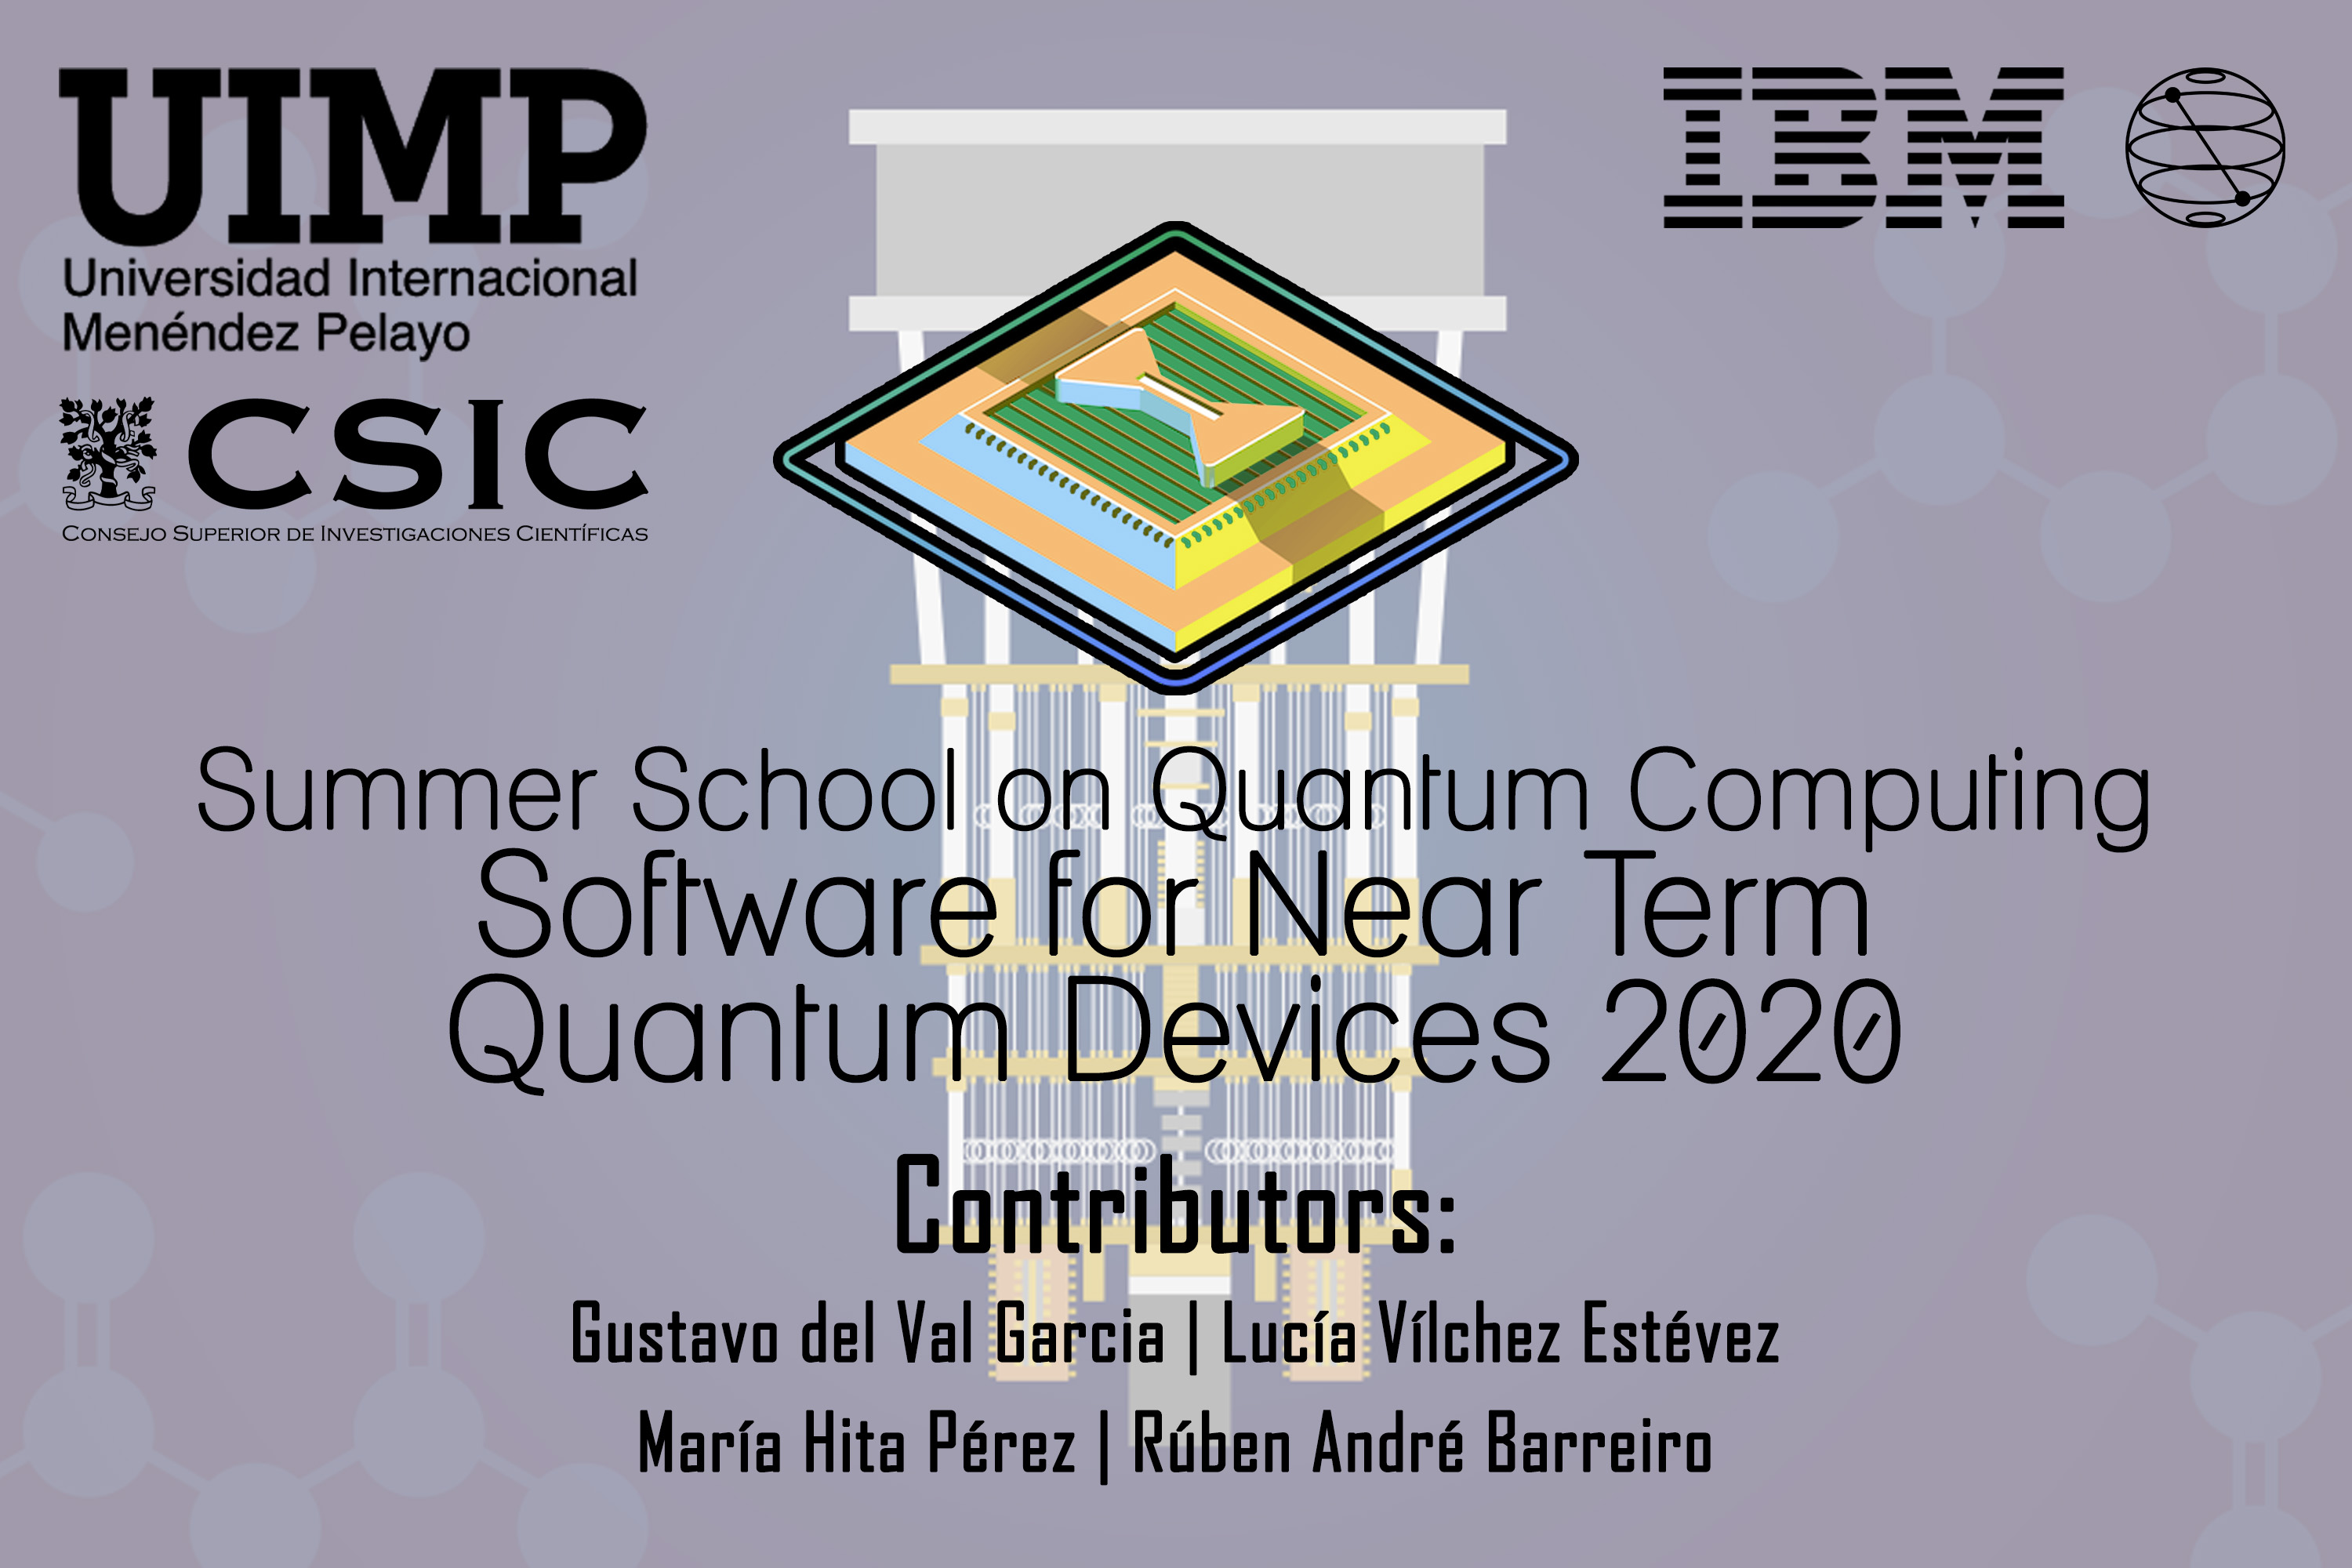 https://raw.githubusercontent.com/rubenandrebarreiro/summer-school-on-quantum-computing-software-for-near-term-quantum-devices-2020/master/imgs/JPGs/banner-1.jpg